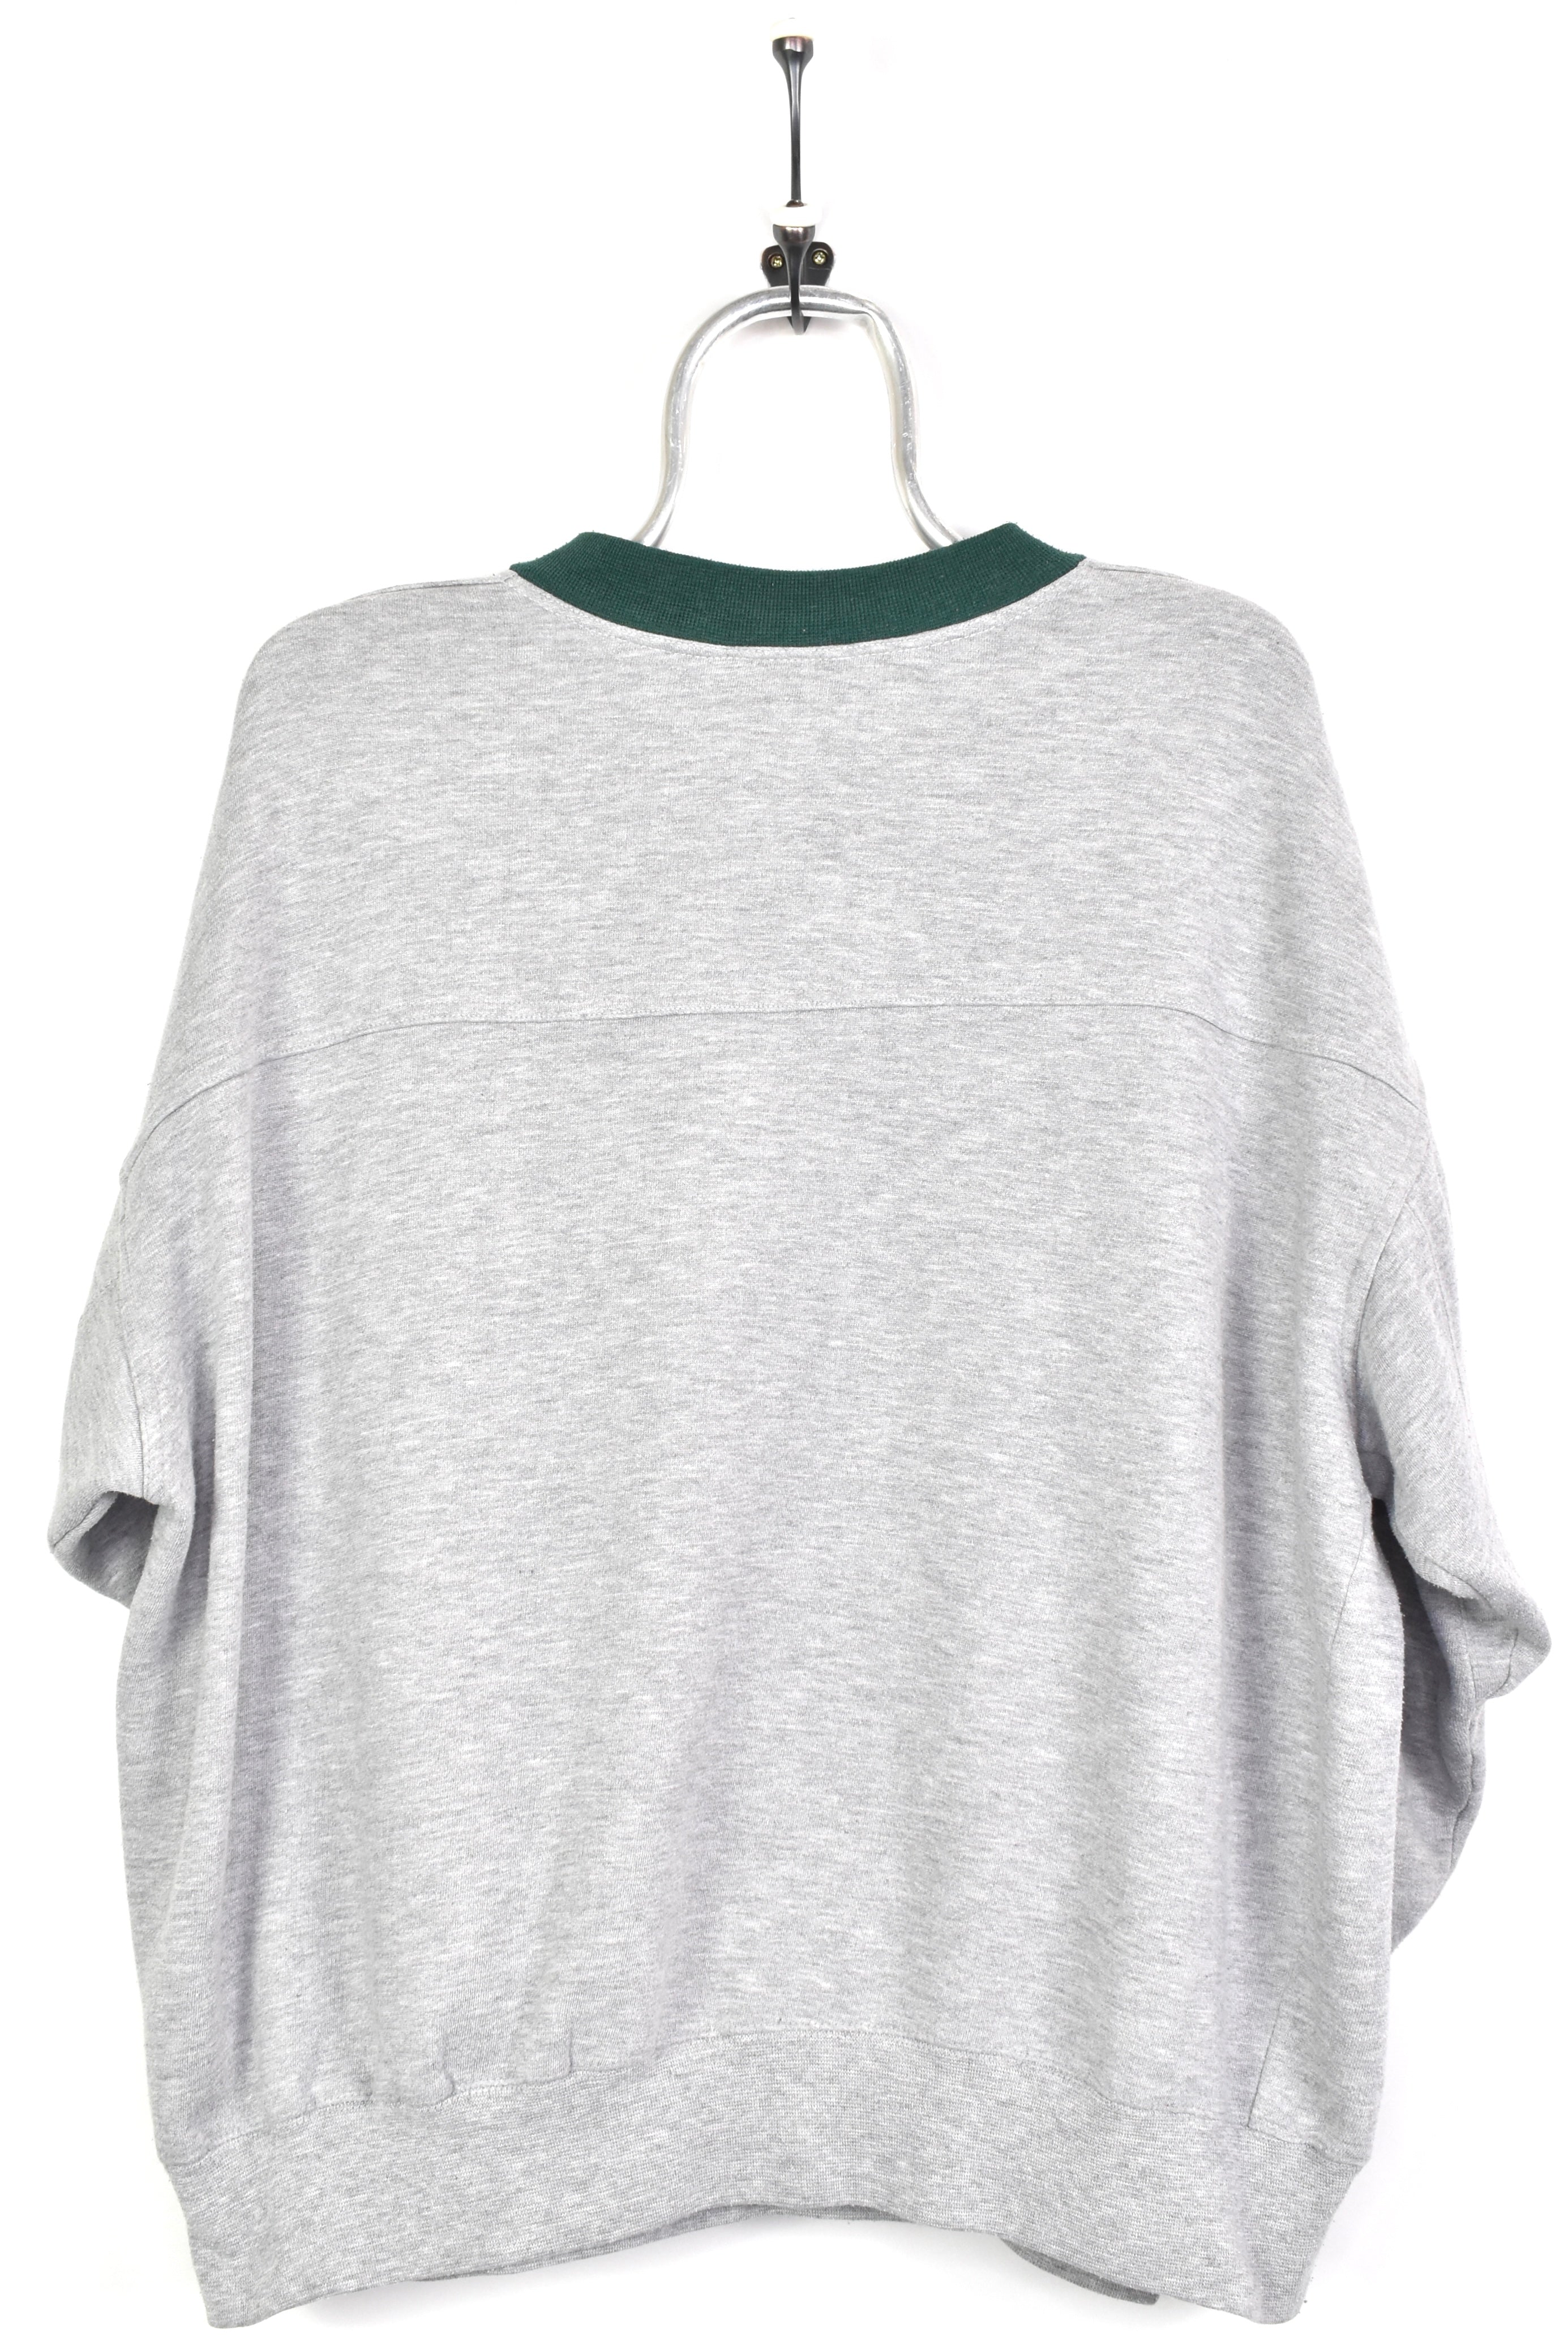 Vintage Green Bay Packers sweatshirt, NFL grey embroidered crewneck - AU L PRO SPORT